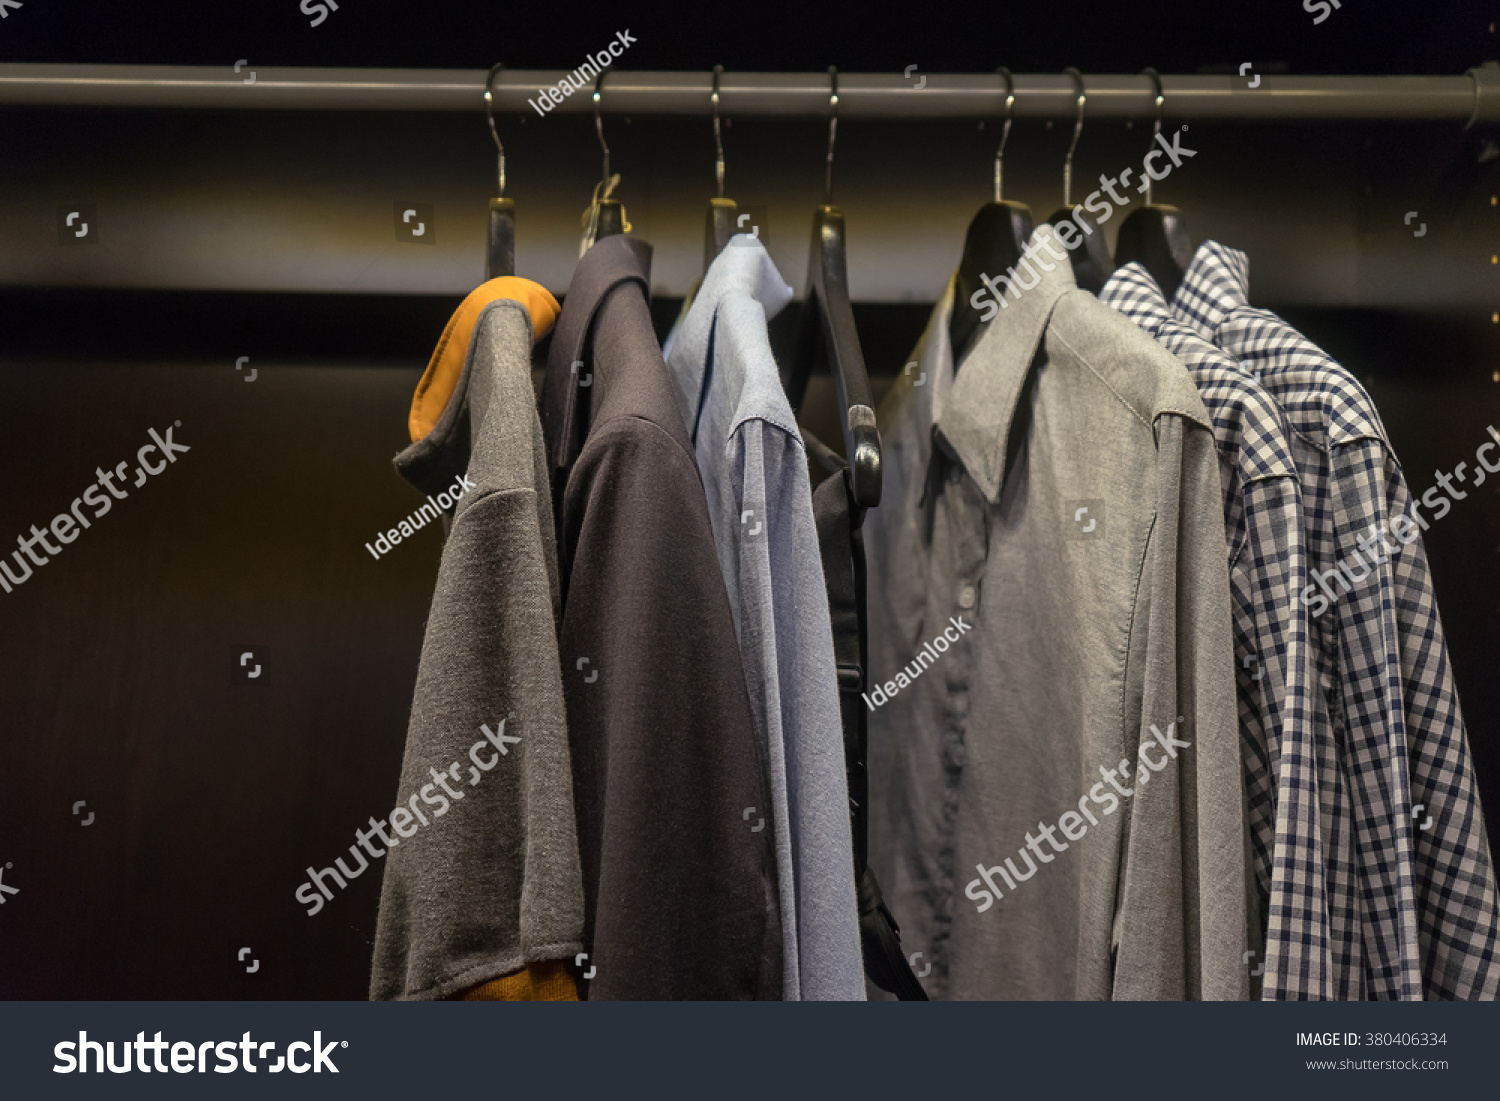 shirts in the wardrobe #380406334